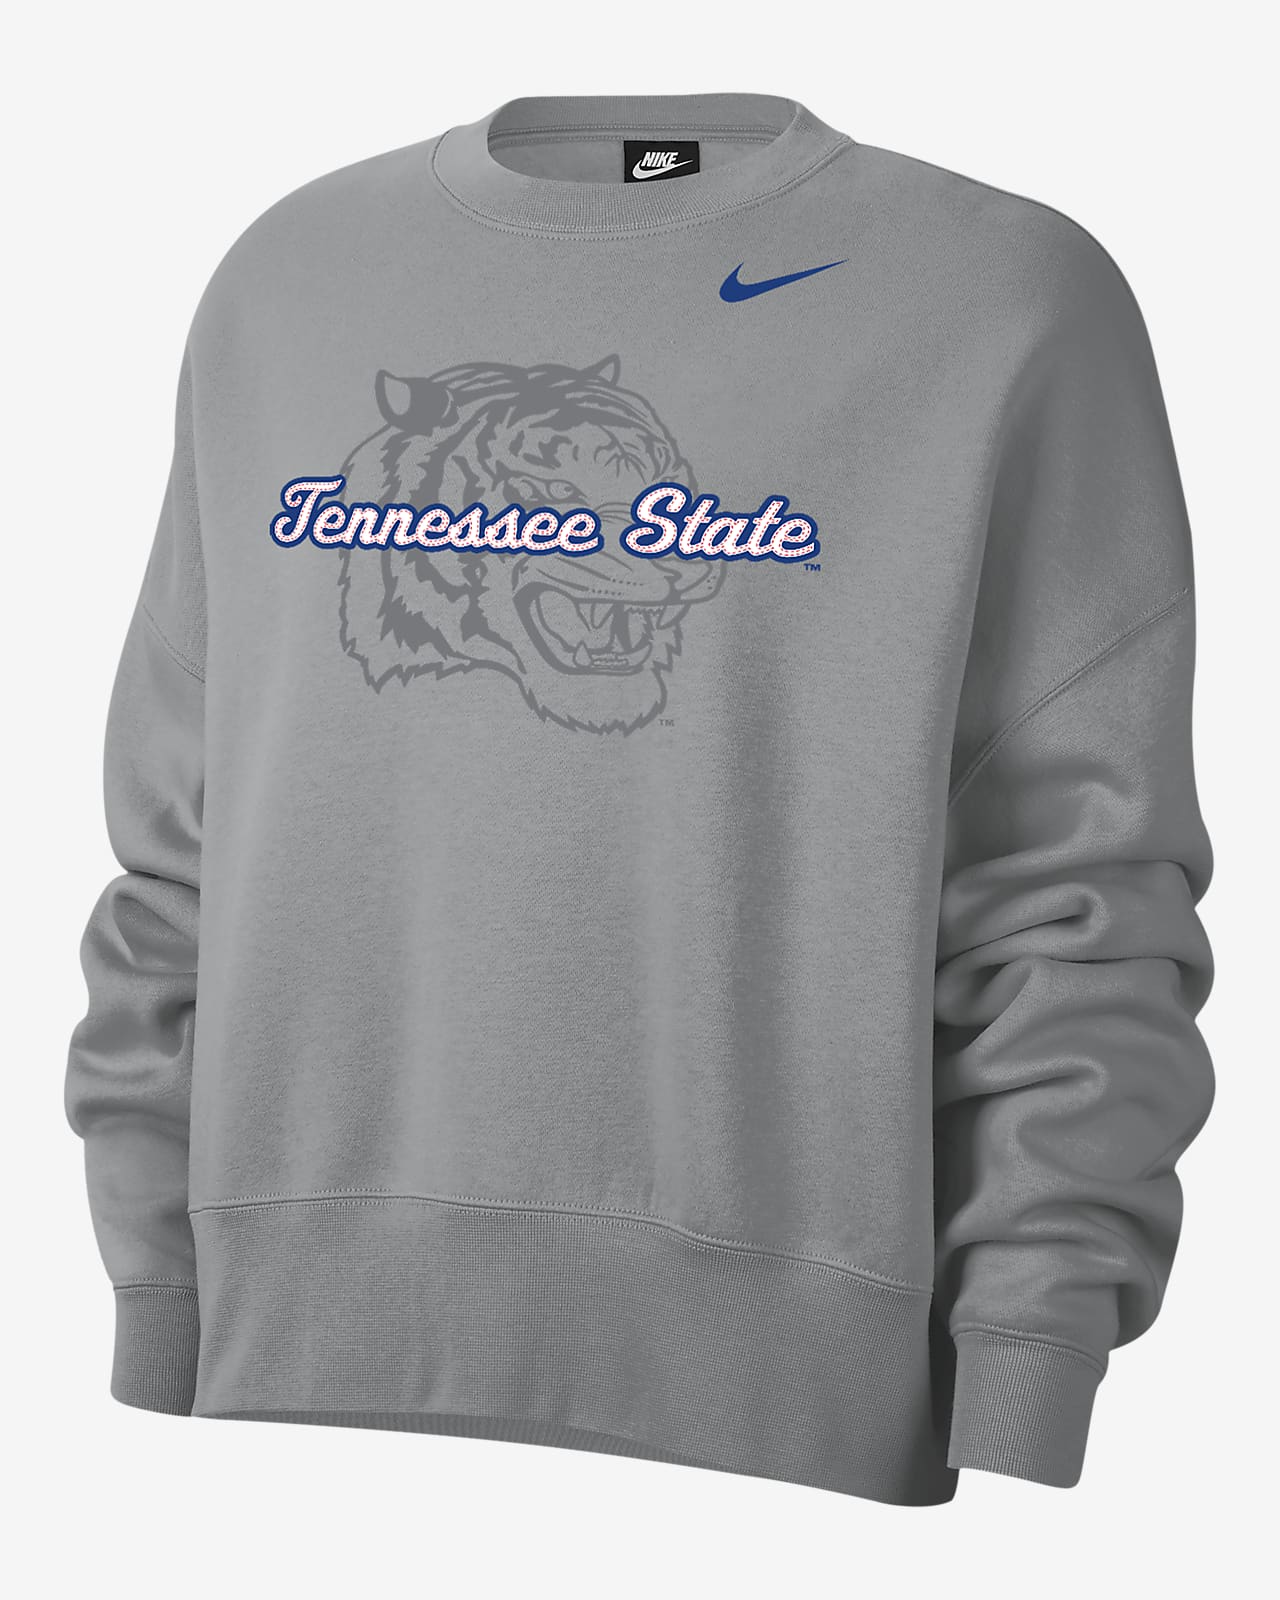 Nike College (Tennessee State) Women's Crew-Neck Sweatshirt